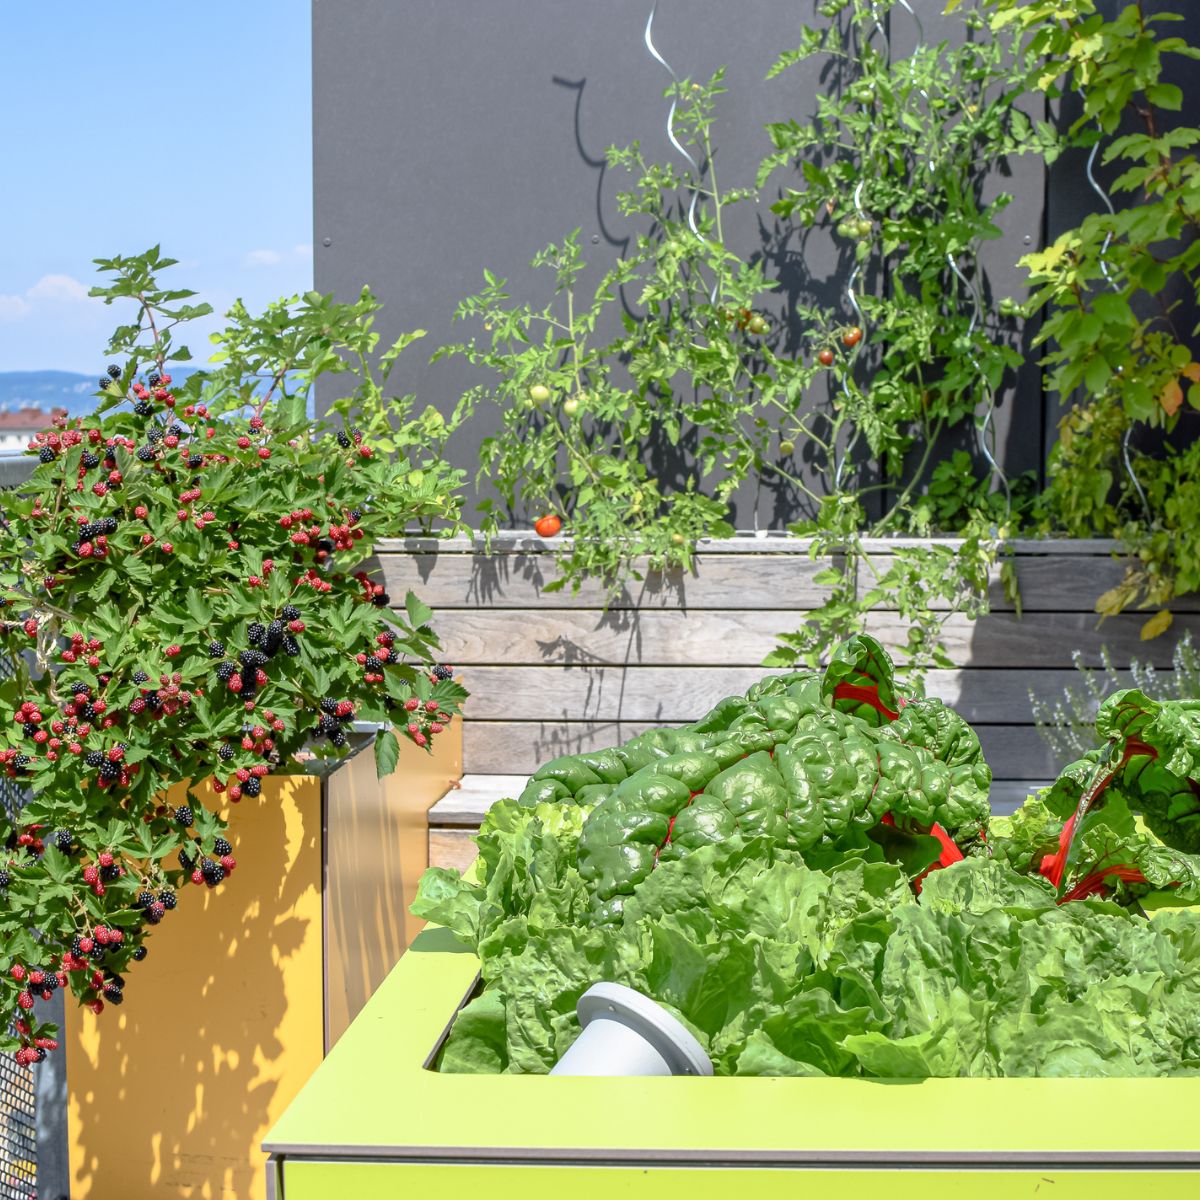 Mangel, tomatoes and blackberries growing on a rooftop garden in Vienna